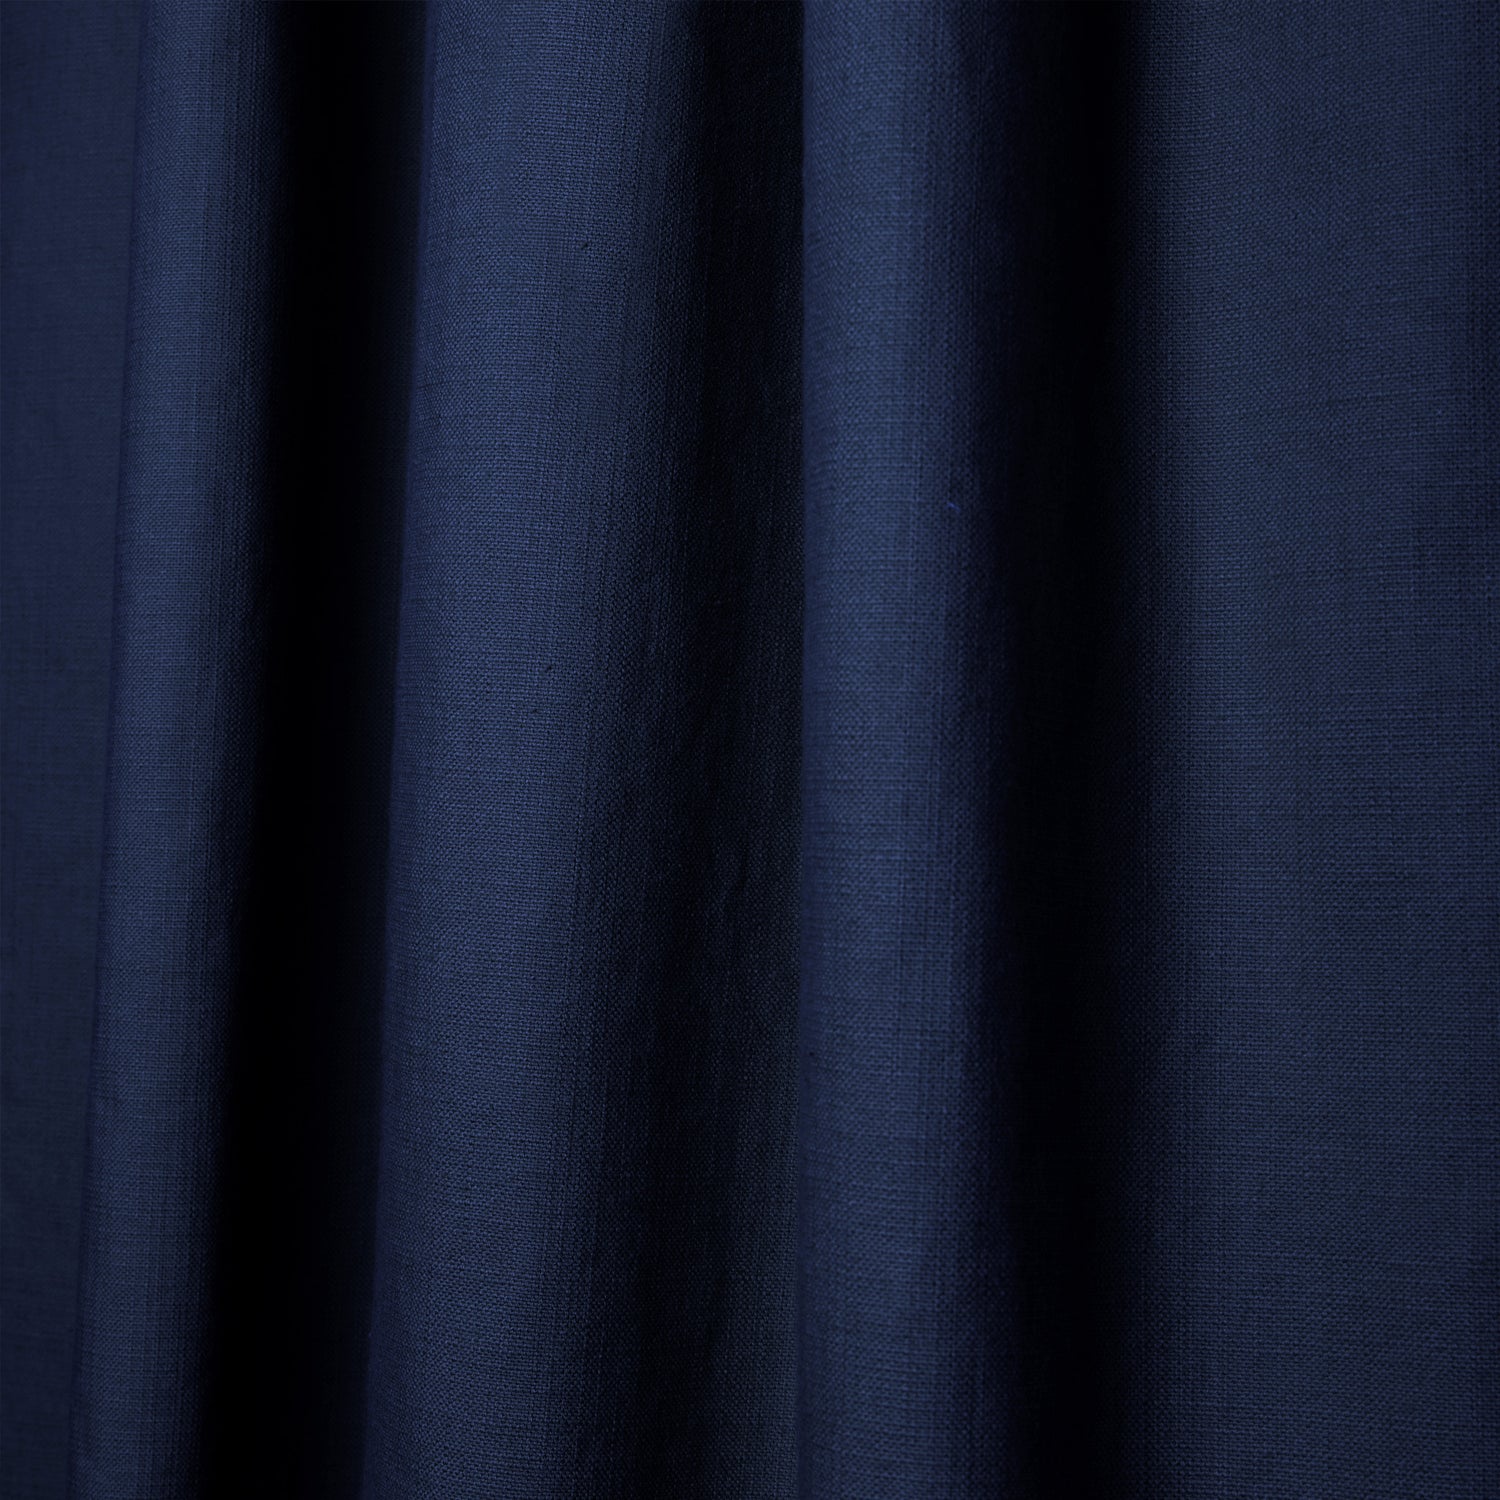 Navy Blue Curtain Close-Up